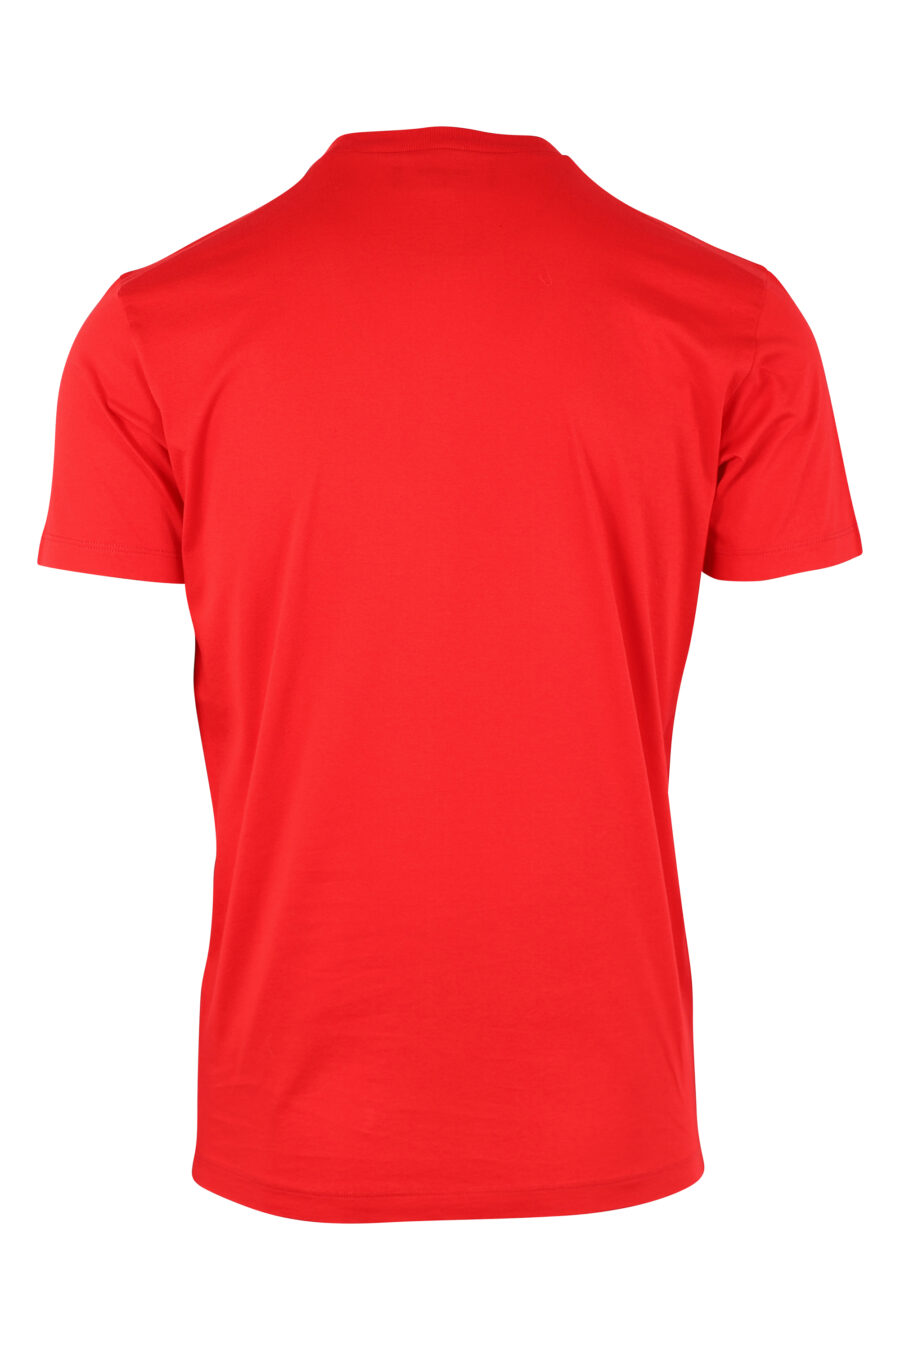 Camiseta roja con maxilogo "ceresio 9" - IMG 9751